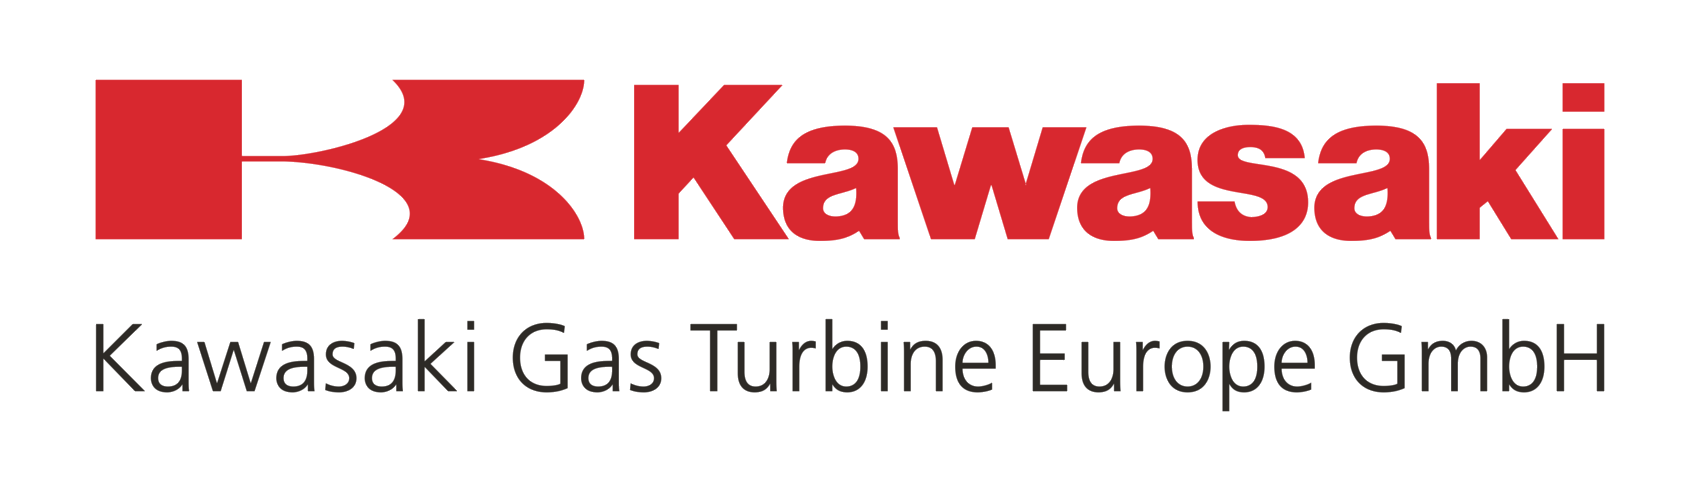 Kawasaki Gas Turbine Europe GmbHlogo